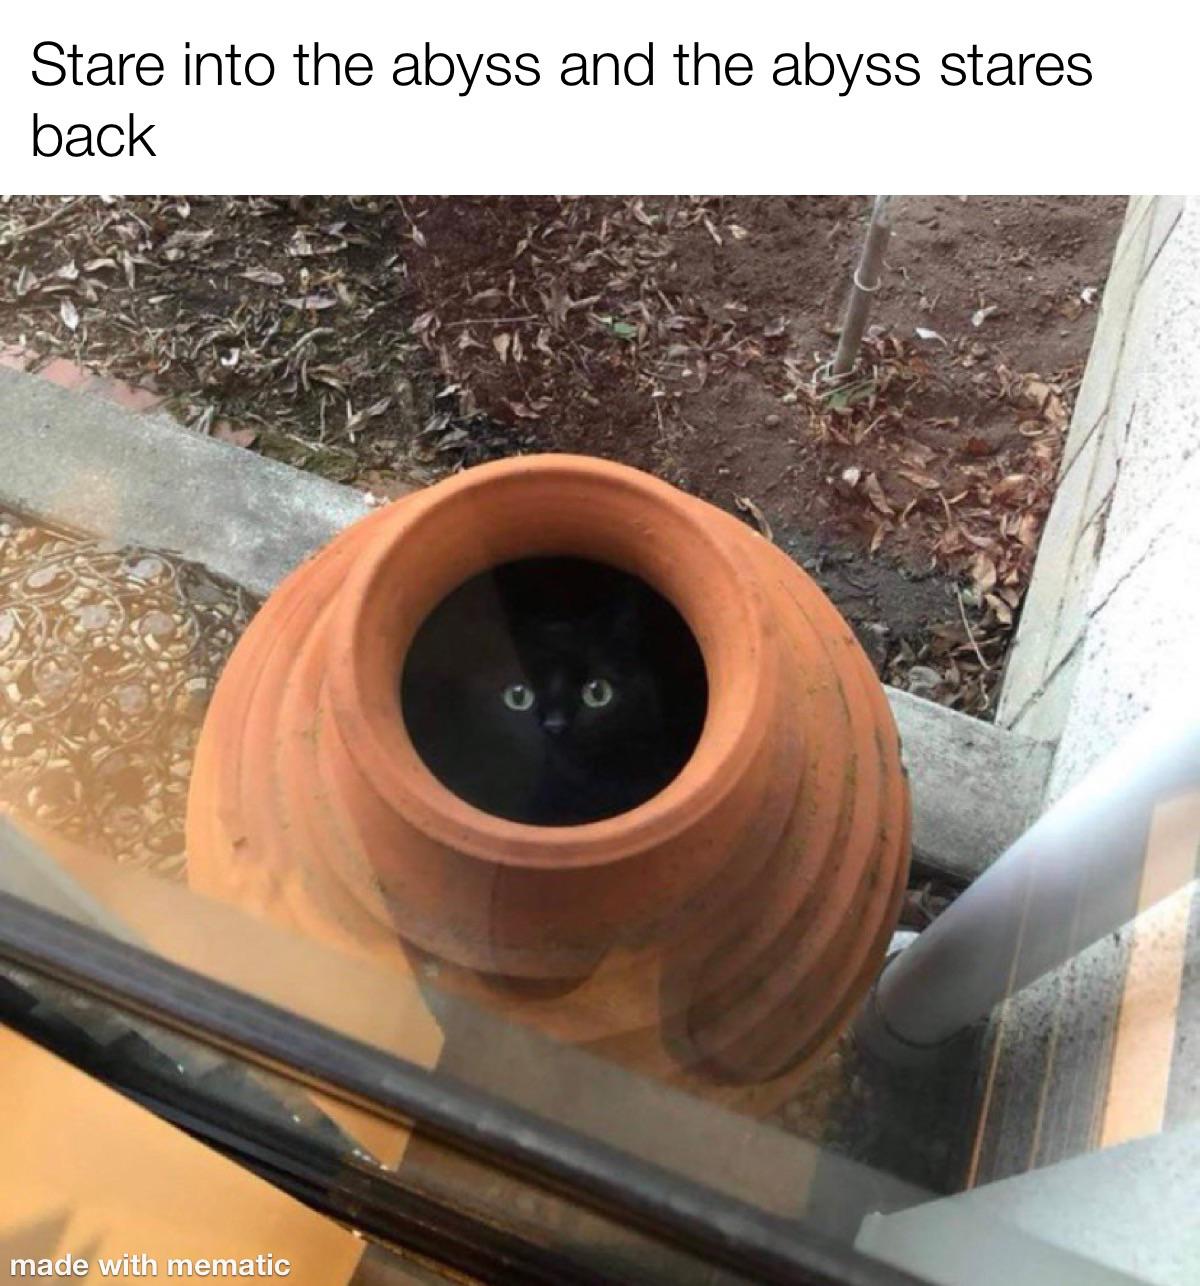 dank memes - abyss stares back cat meme - Stare into the abyss and the abyss stares back made with mematic